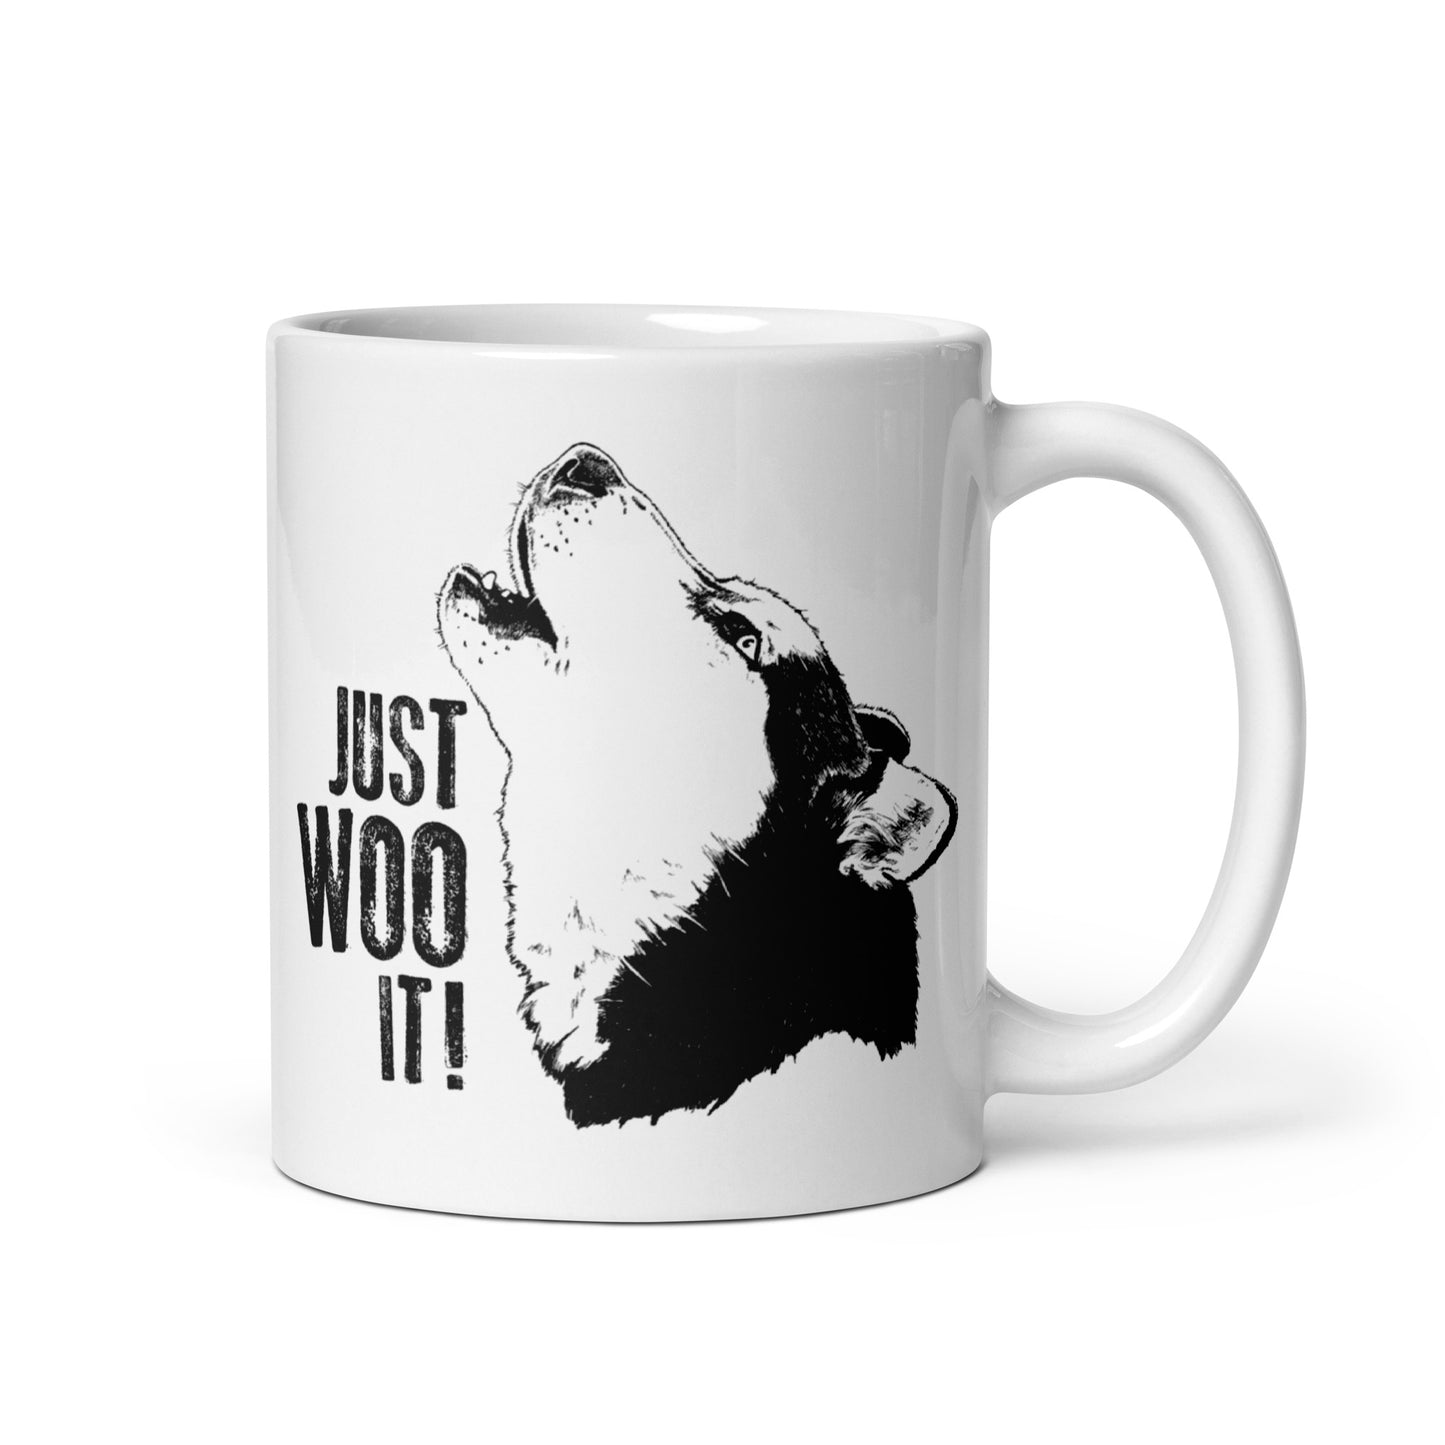 JUST WOO IT! - Siberian Husky - Coffee Mug